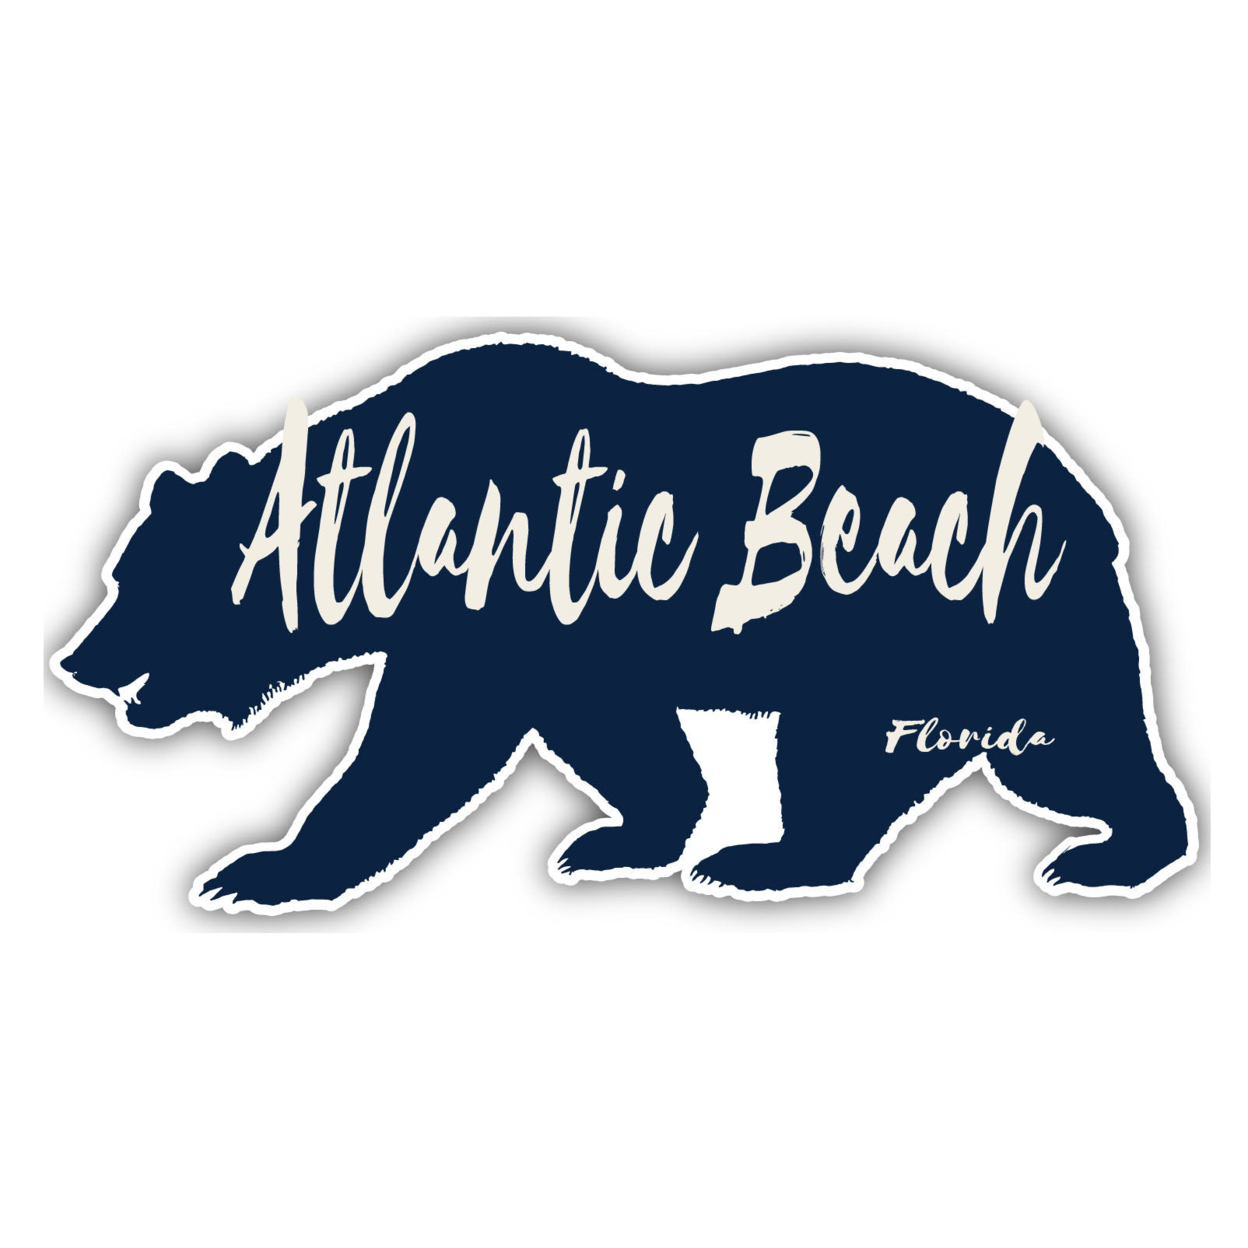 Atlantic Beach Florida Souvenir Decorative Stickers (Choose Theme And Size) - 4-Pack, 10-Inch, Bear